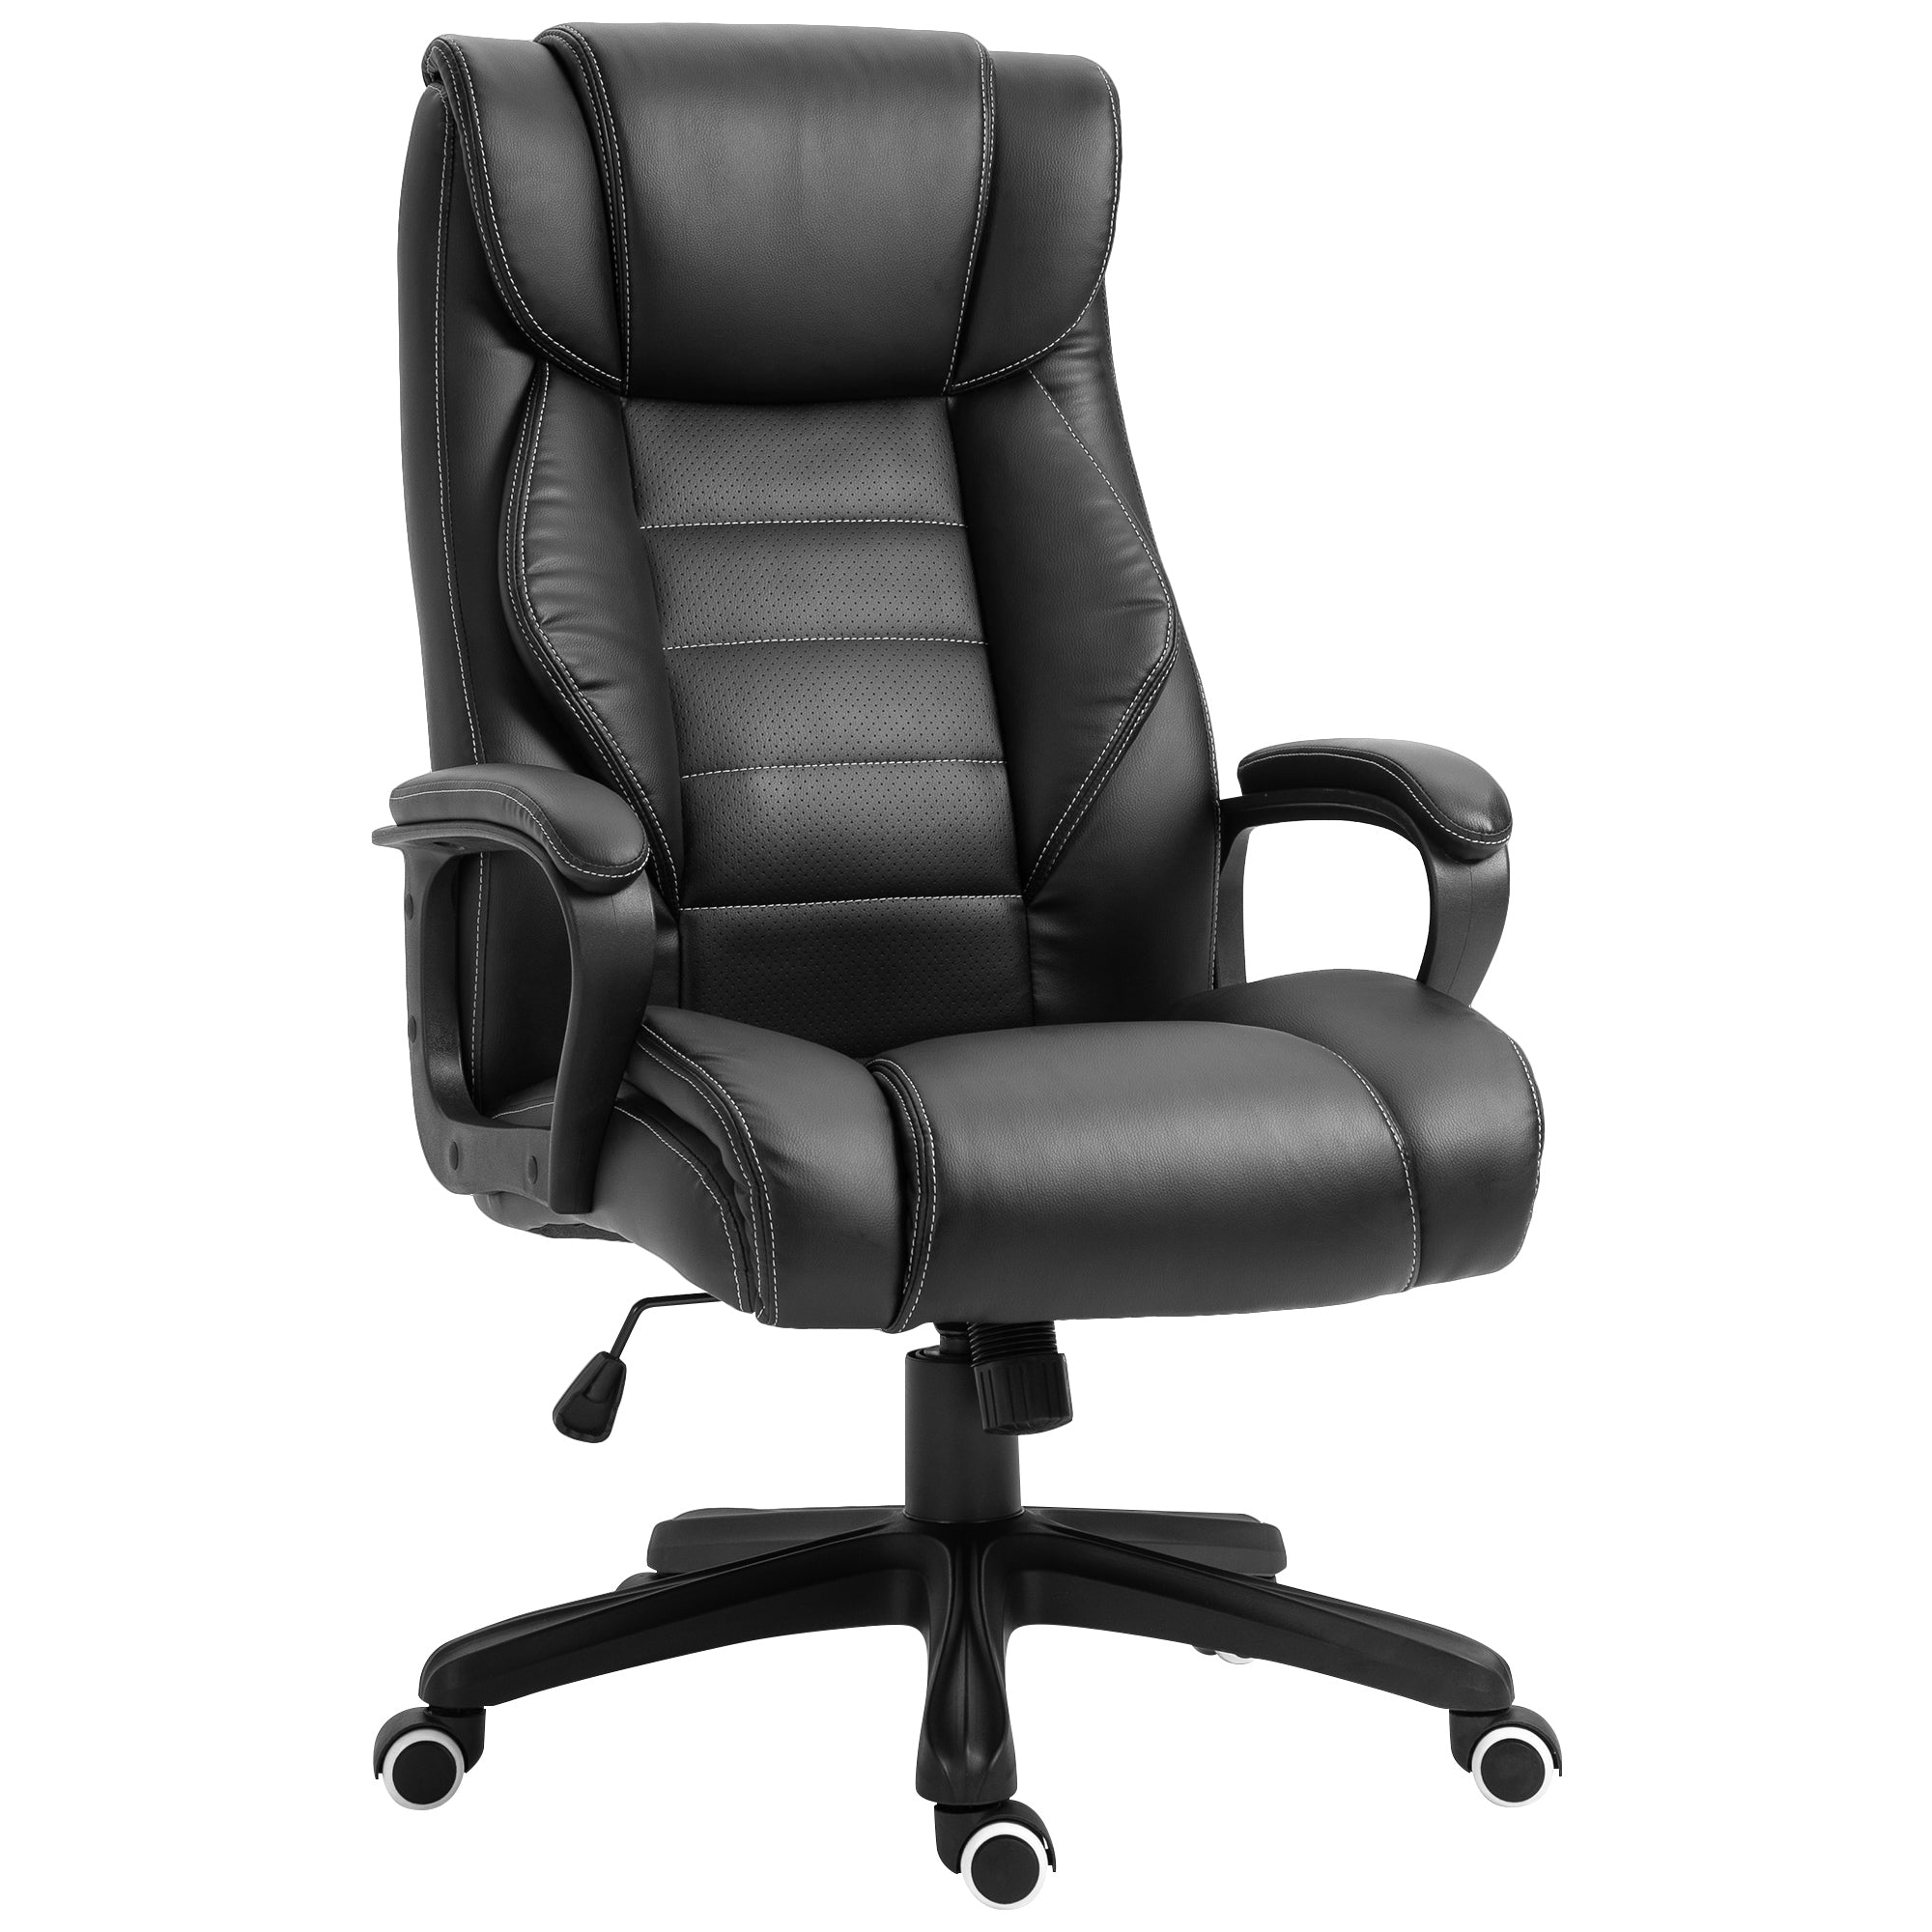 Vinsetto High Back Executive Office Chair 6- Point Vibration Massage Extra Padded Swivel Ergonomic Tilt Desk Seat Black 6 Points Chair - TJ Hughes